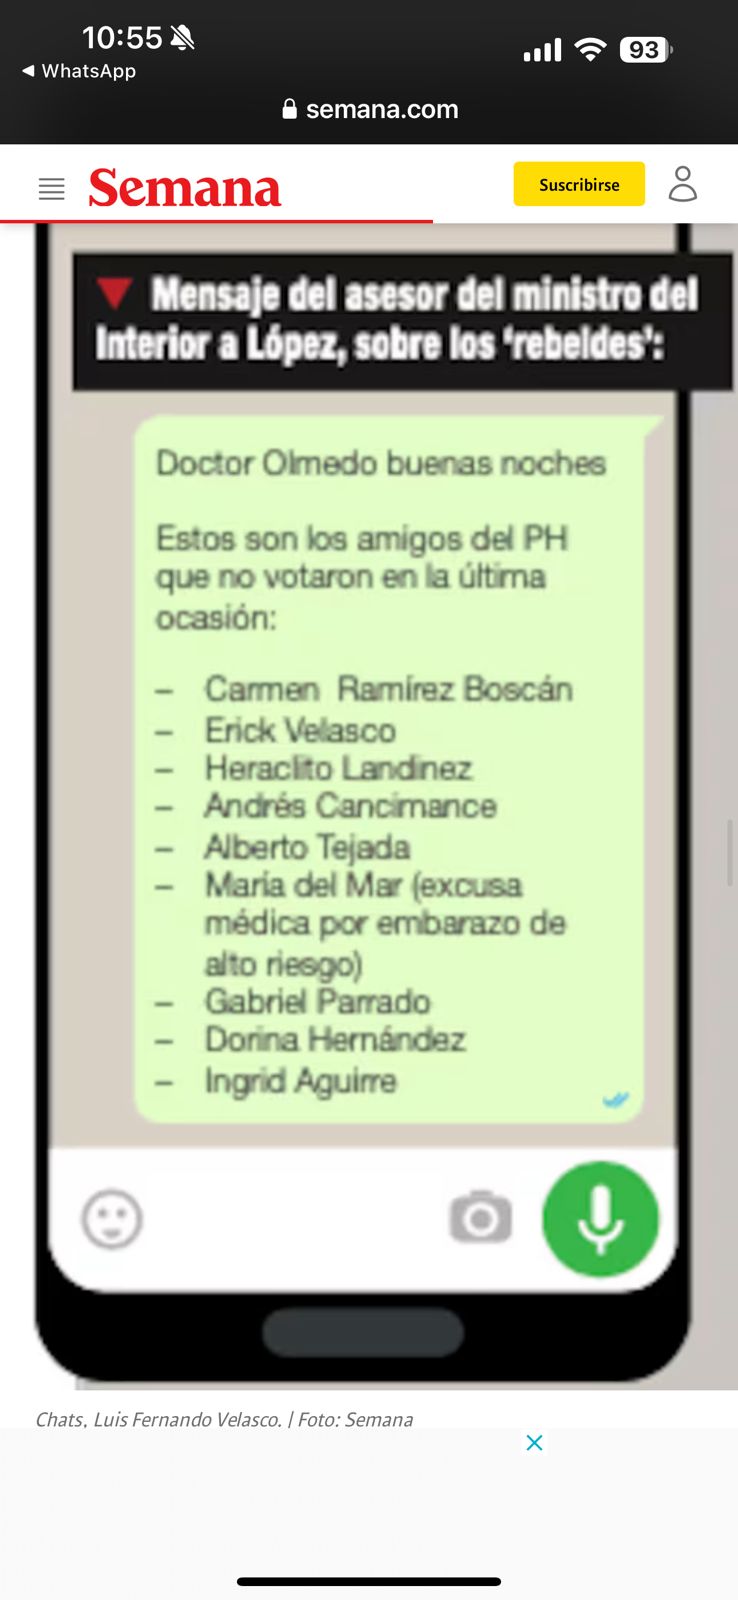 Chat suministrado por Olmedo López